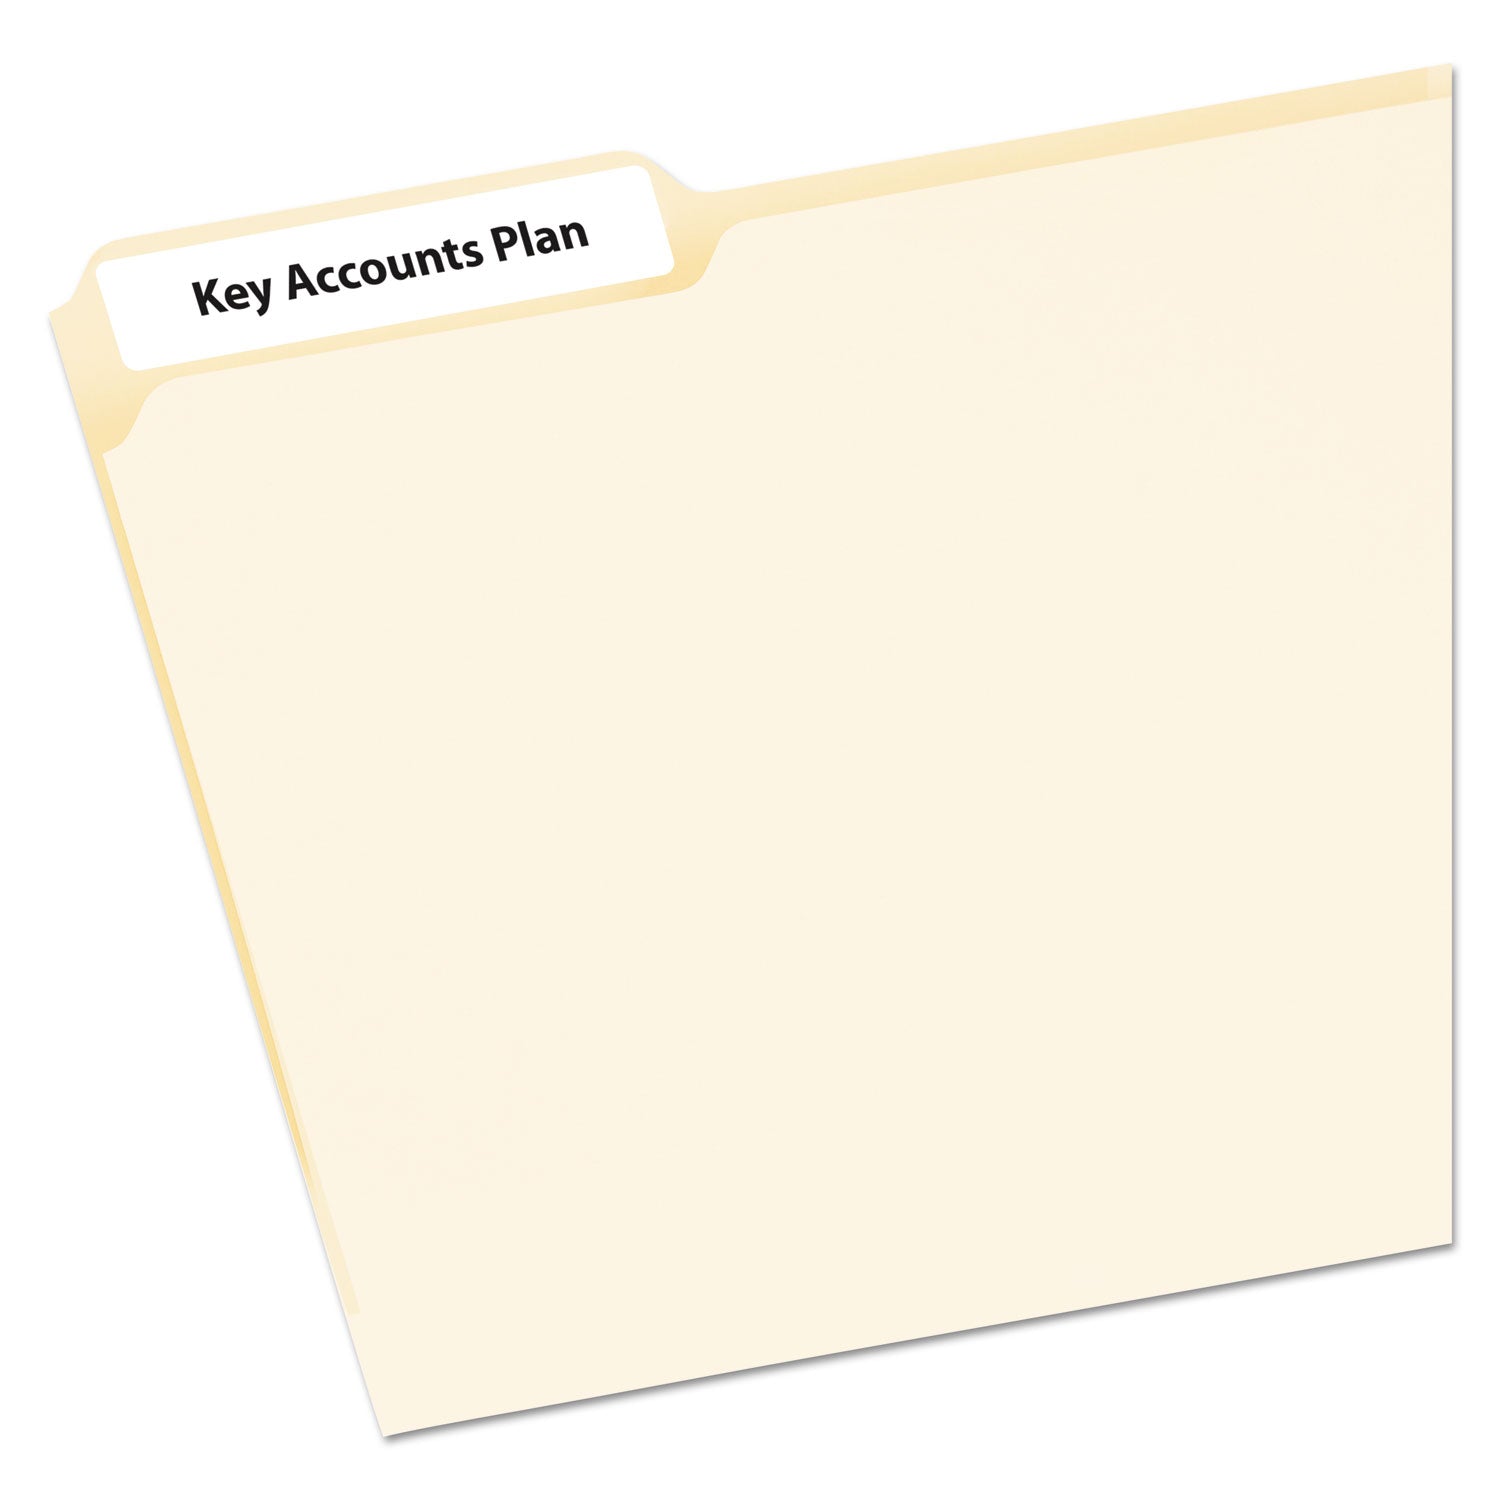 EcoFriendly Permanent File Folder Labels, 0.66 x 3.44, White, 30/Sheet, 25 Sheets/Pack - 